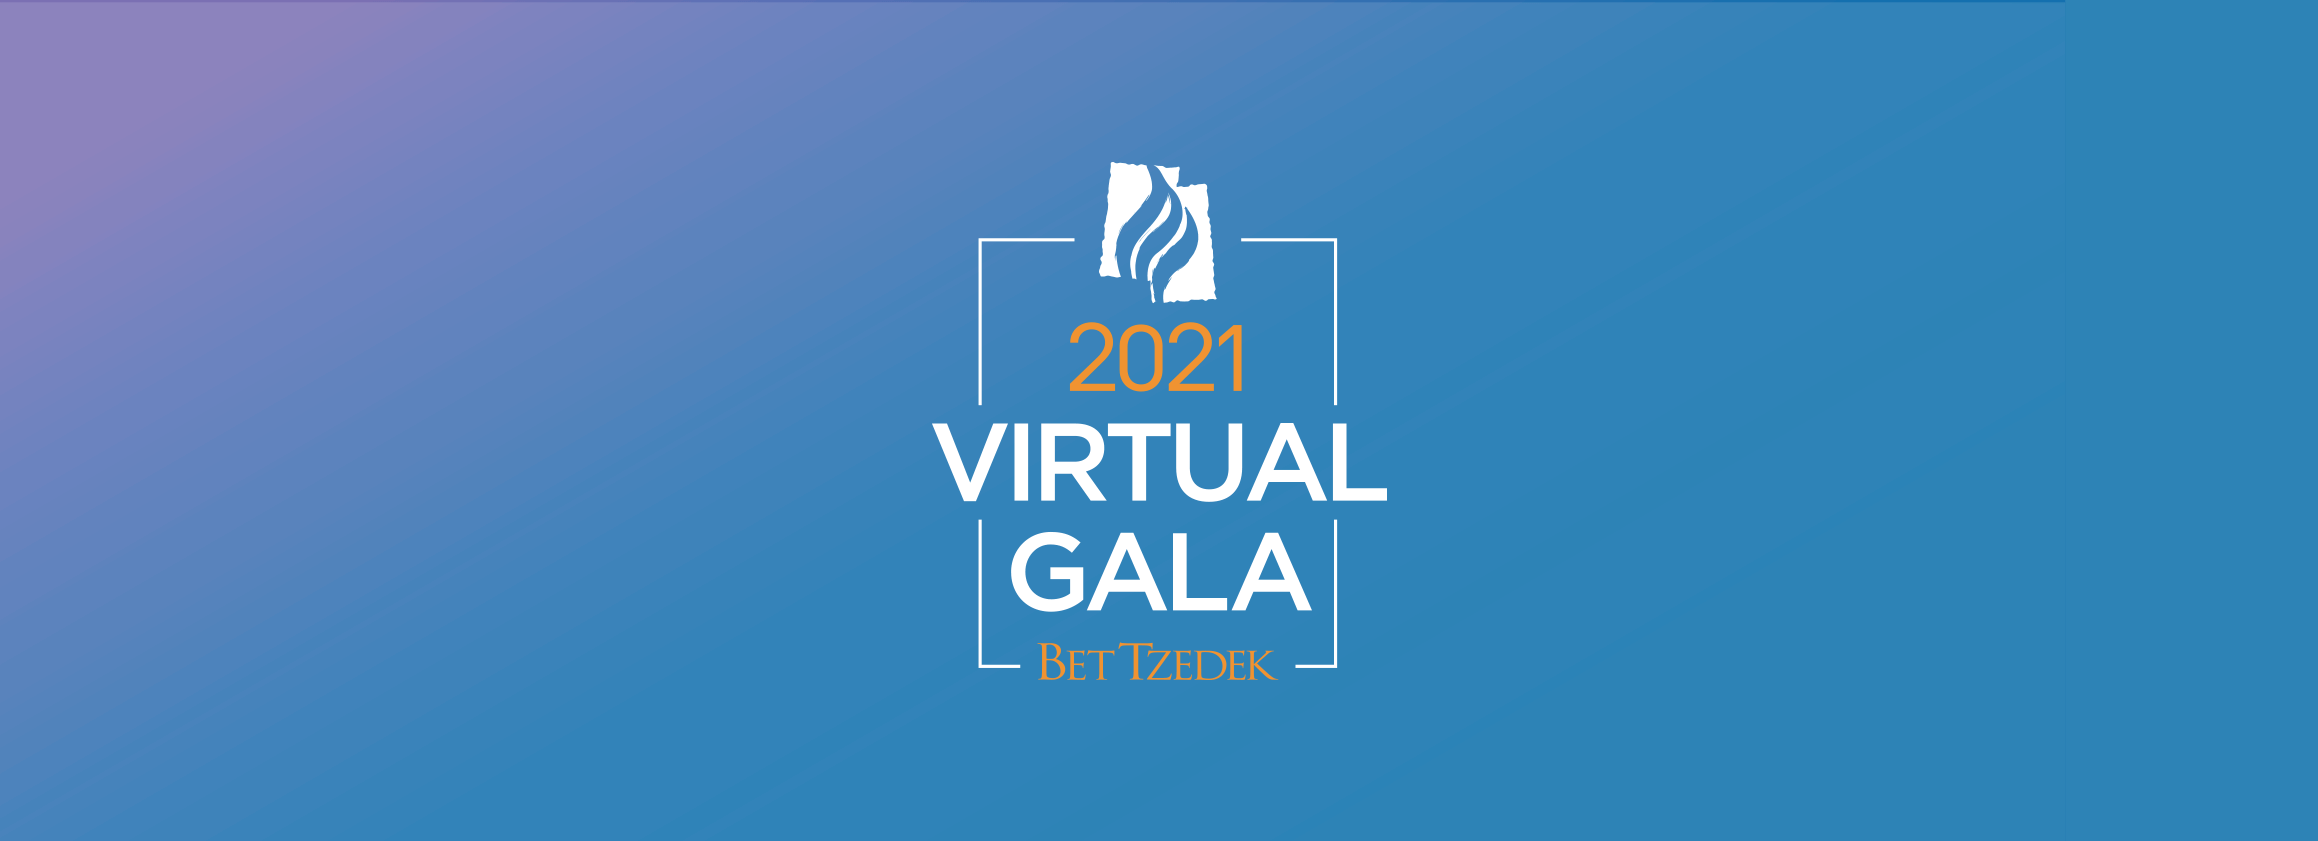 2021 Annual Gala Downloadable Sponsorship Form